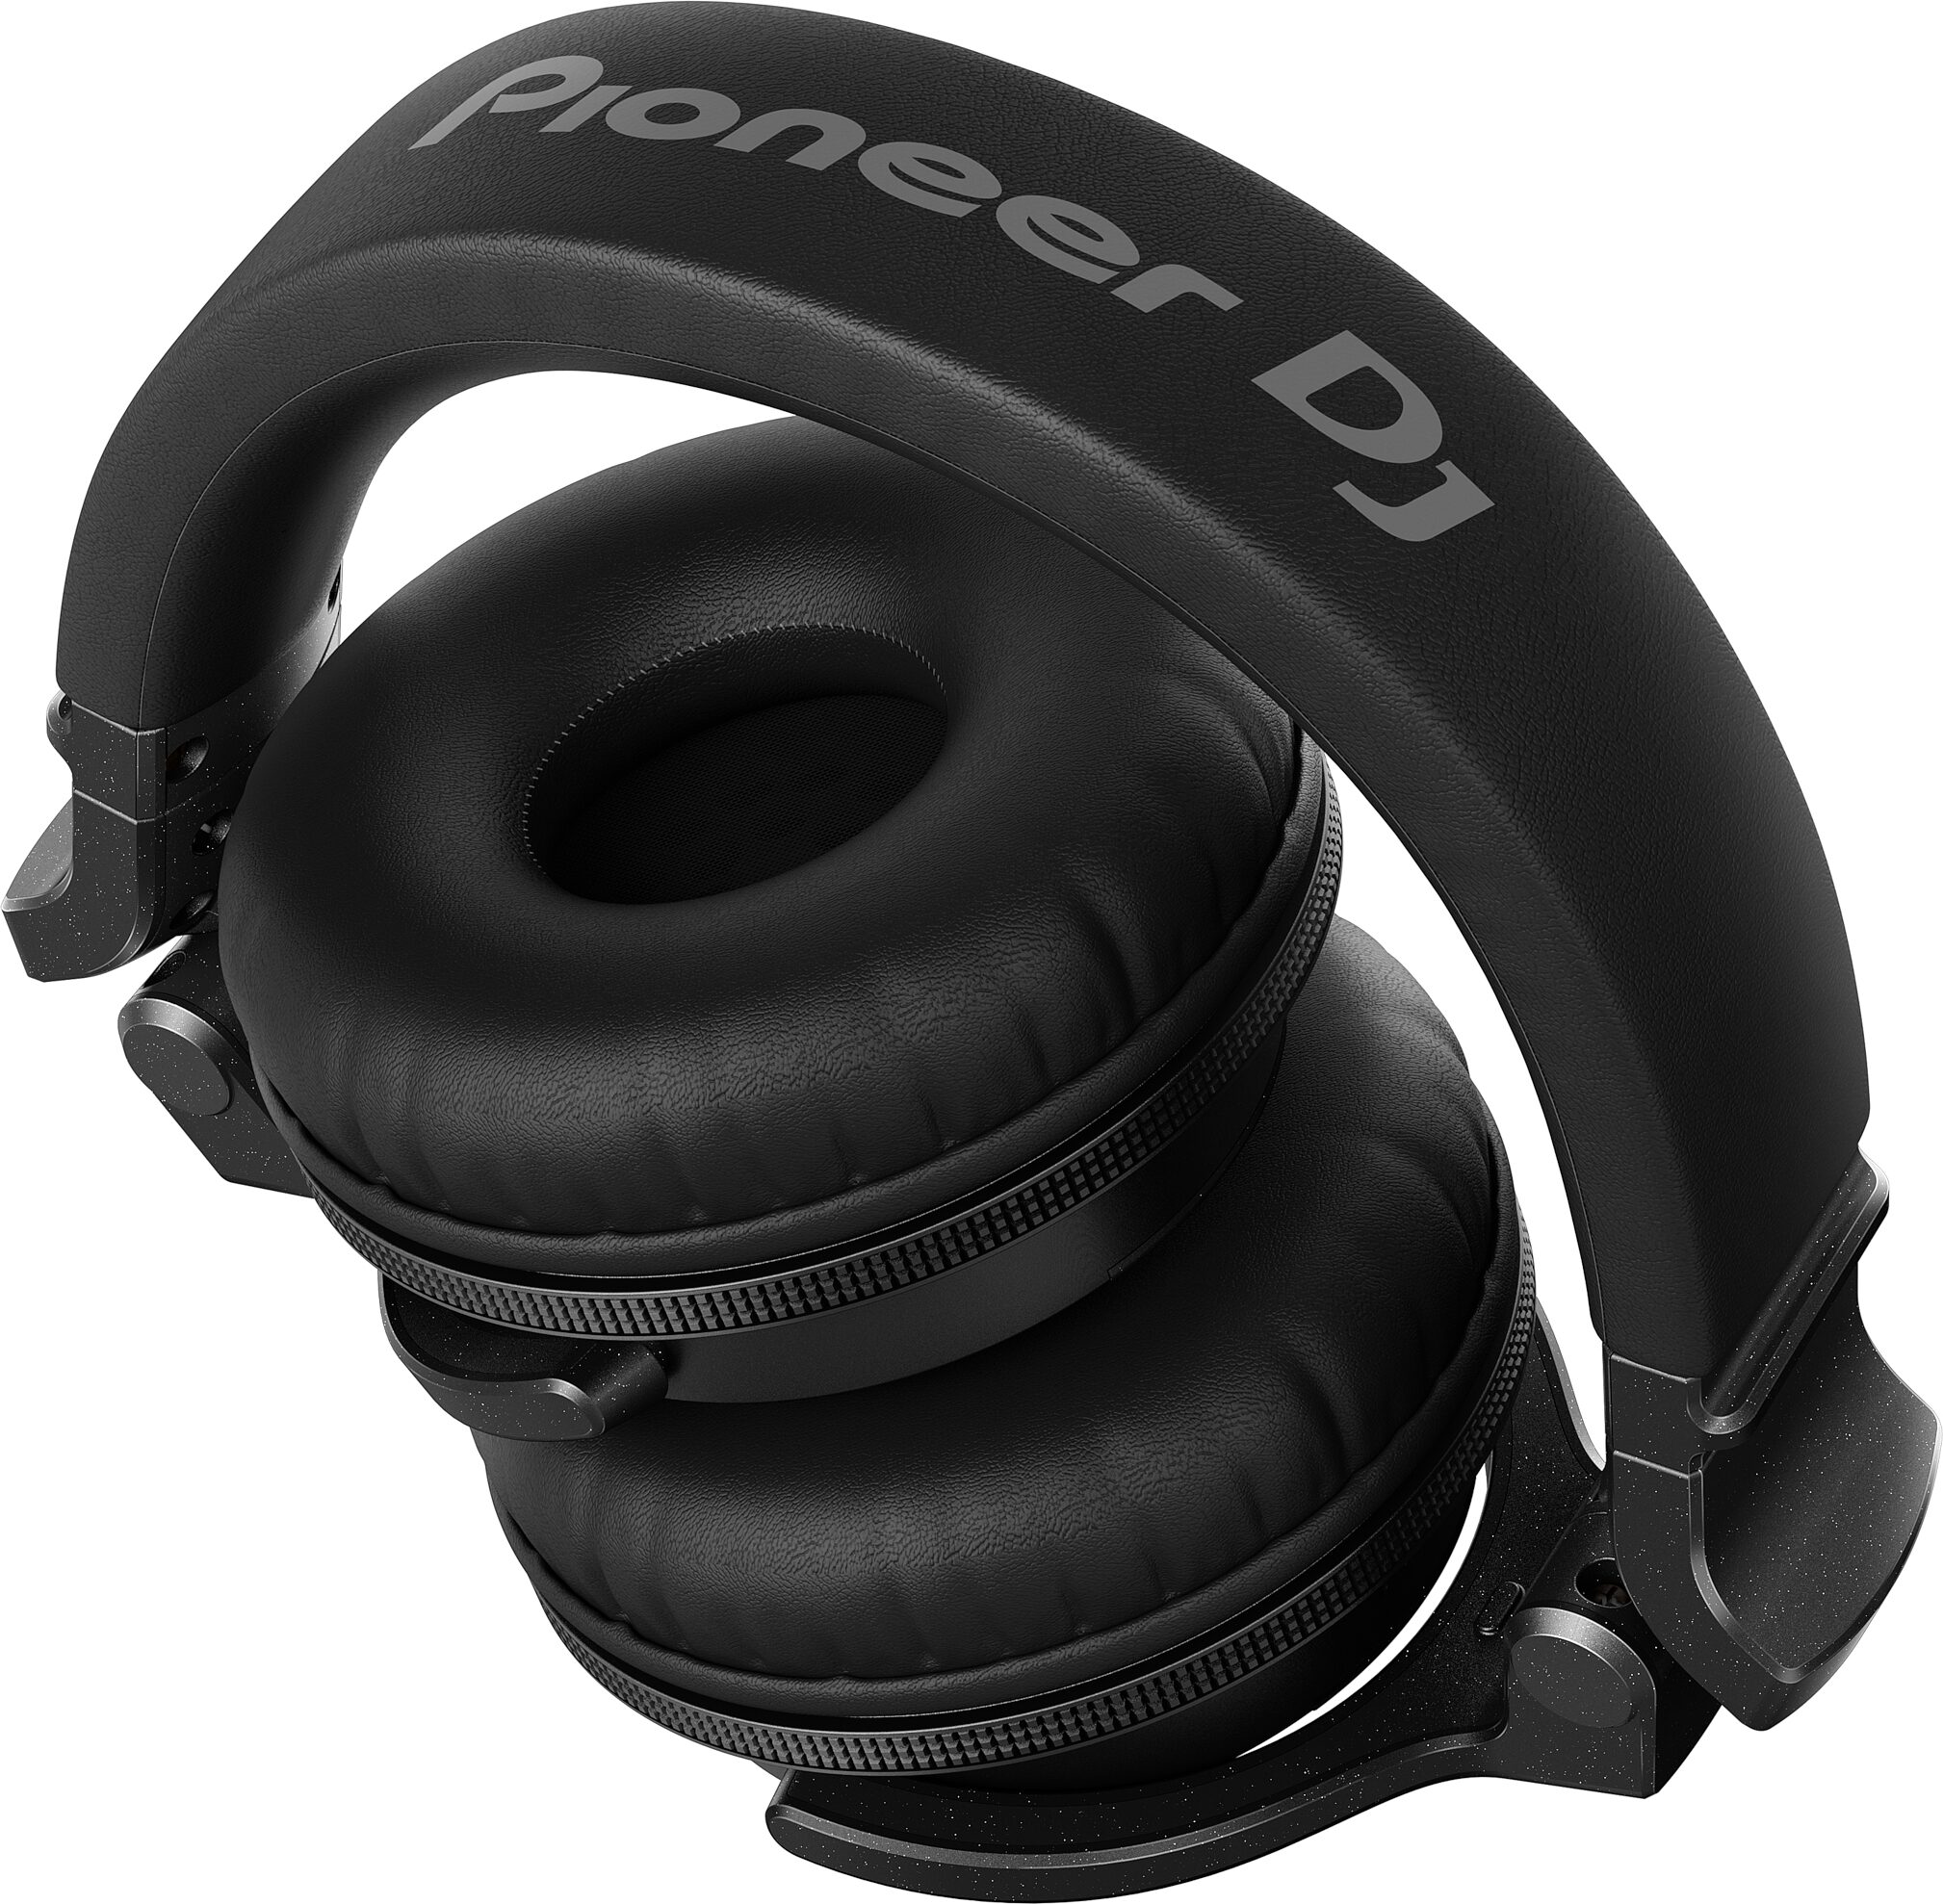 HDJ-X7 K : Auriculares DJ Pioneer DJ -  - es